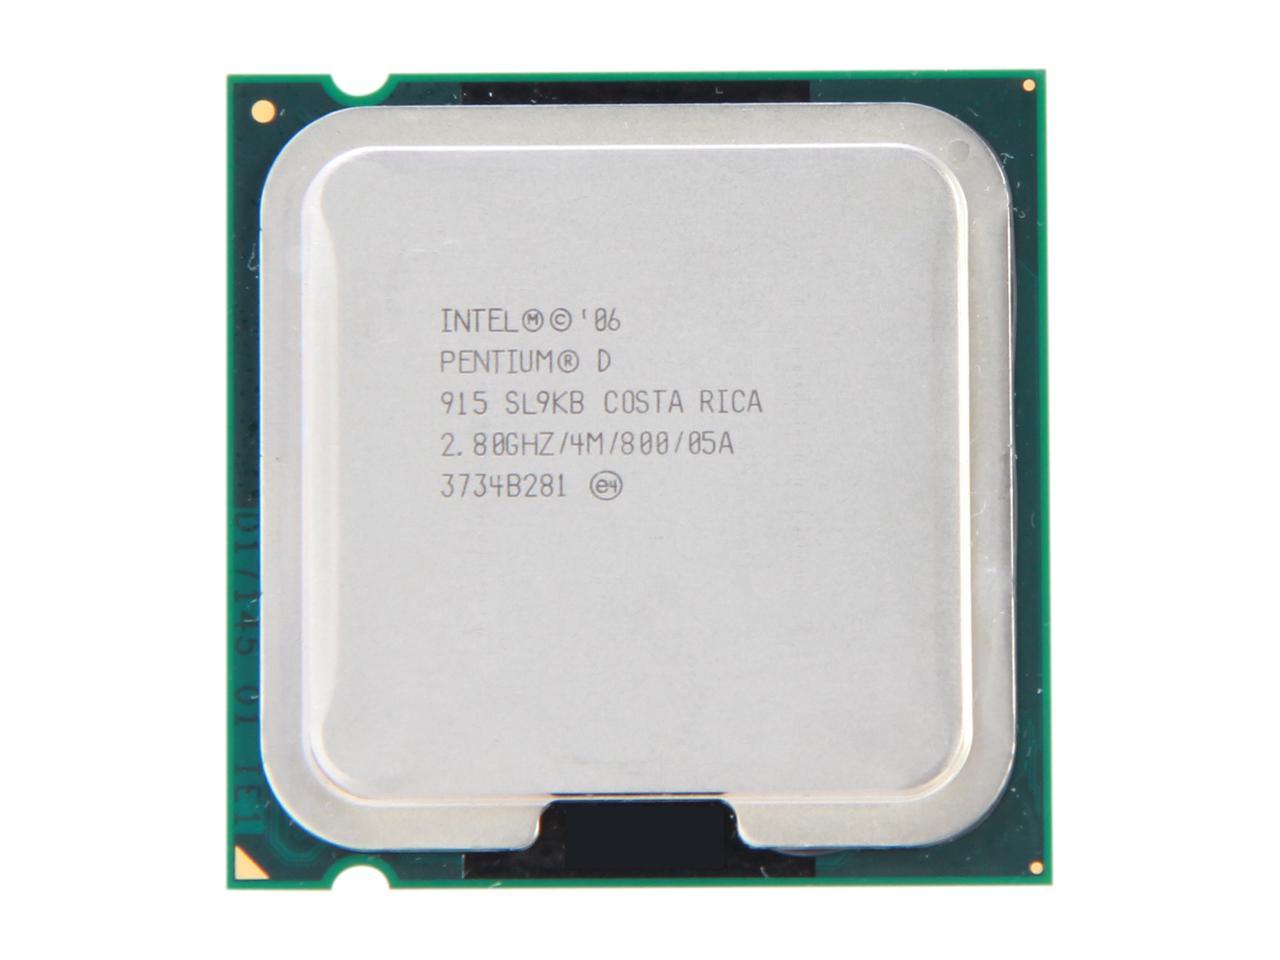 zand een schuldeiser spectrum Refurbished: Intel Pentium D 915 - Pentium D Presler Dual-Core 2.8 GHz LGA  775 95W Desktop Processor - SL9KB - Newegg.com